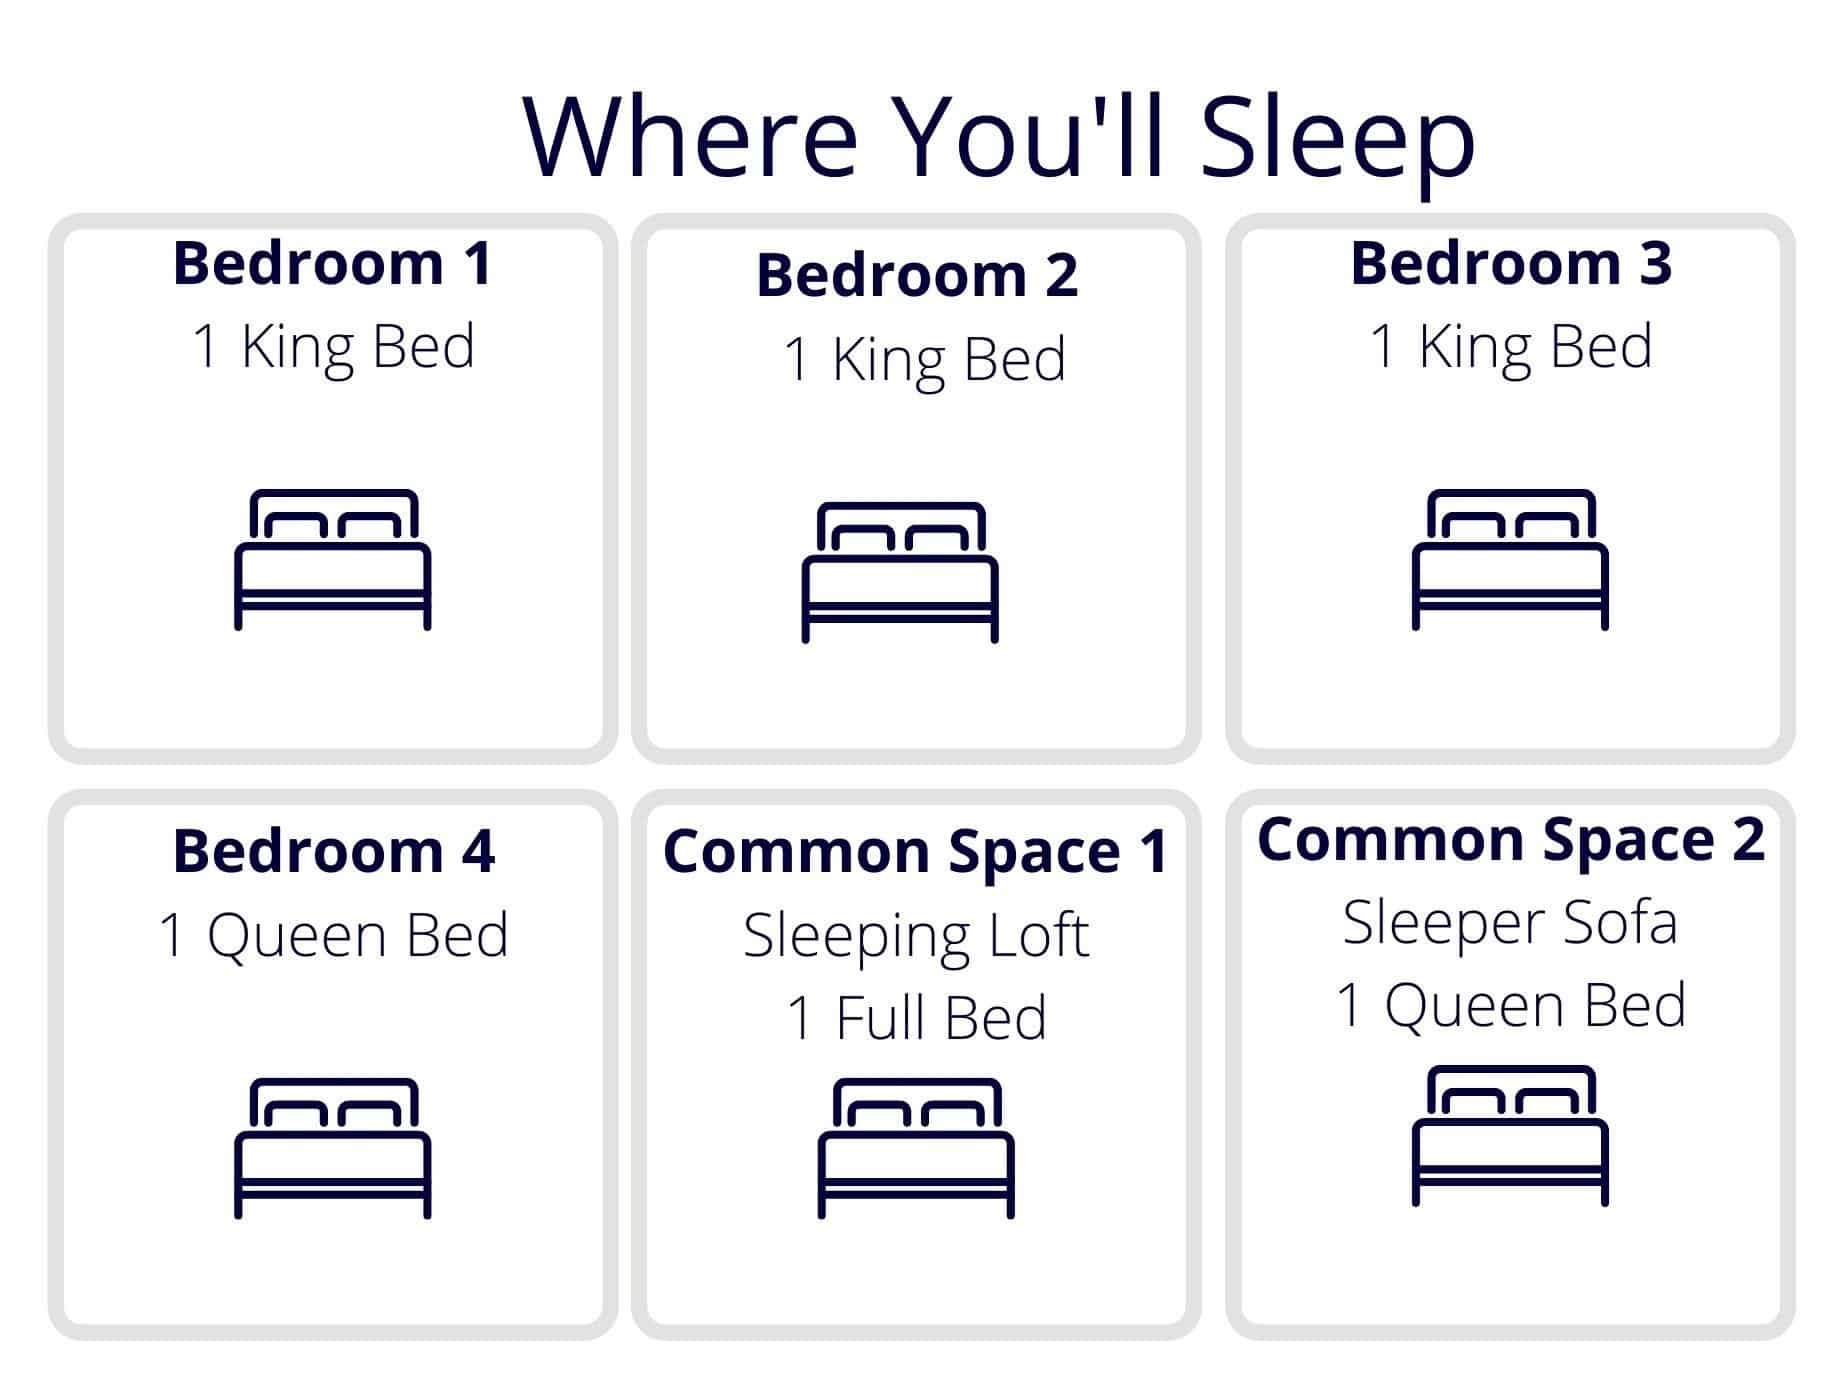 Infographic showing the sleeping arrangements